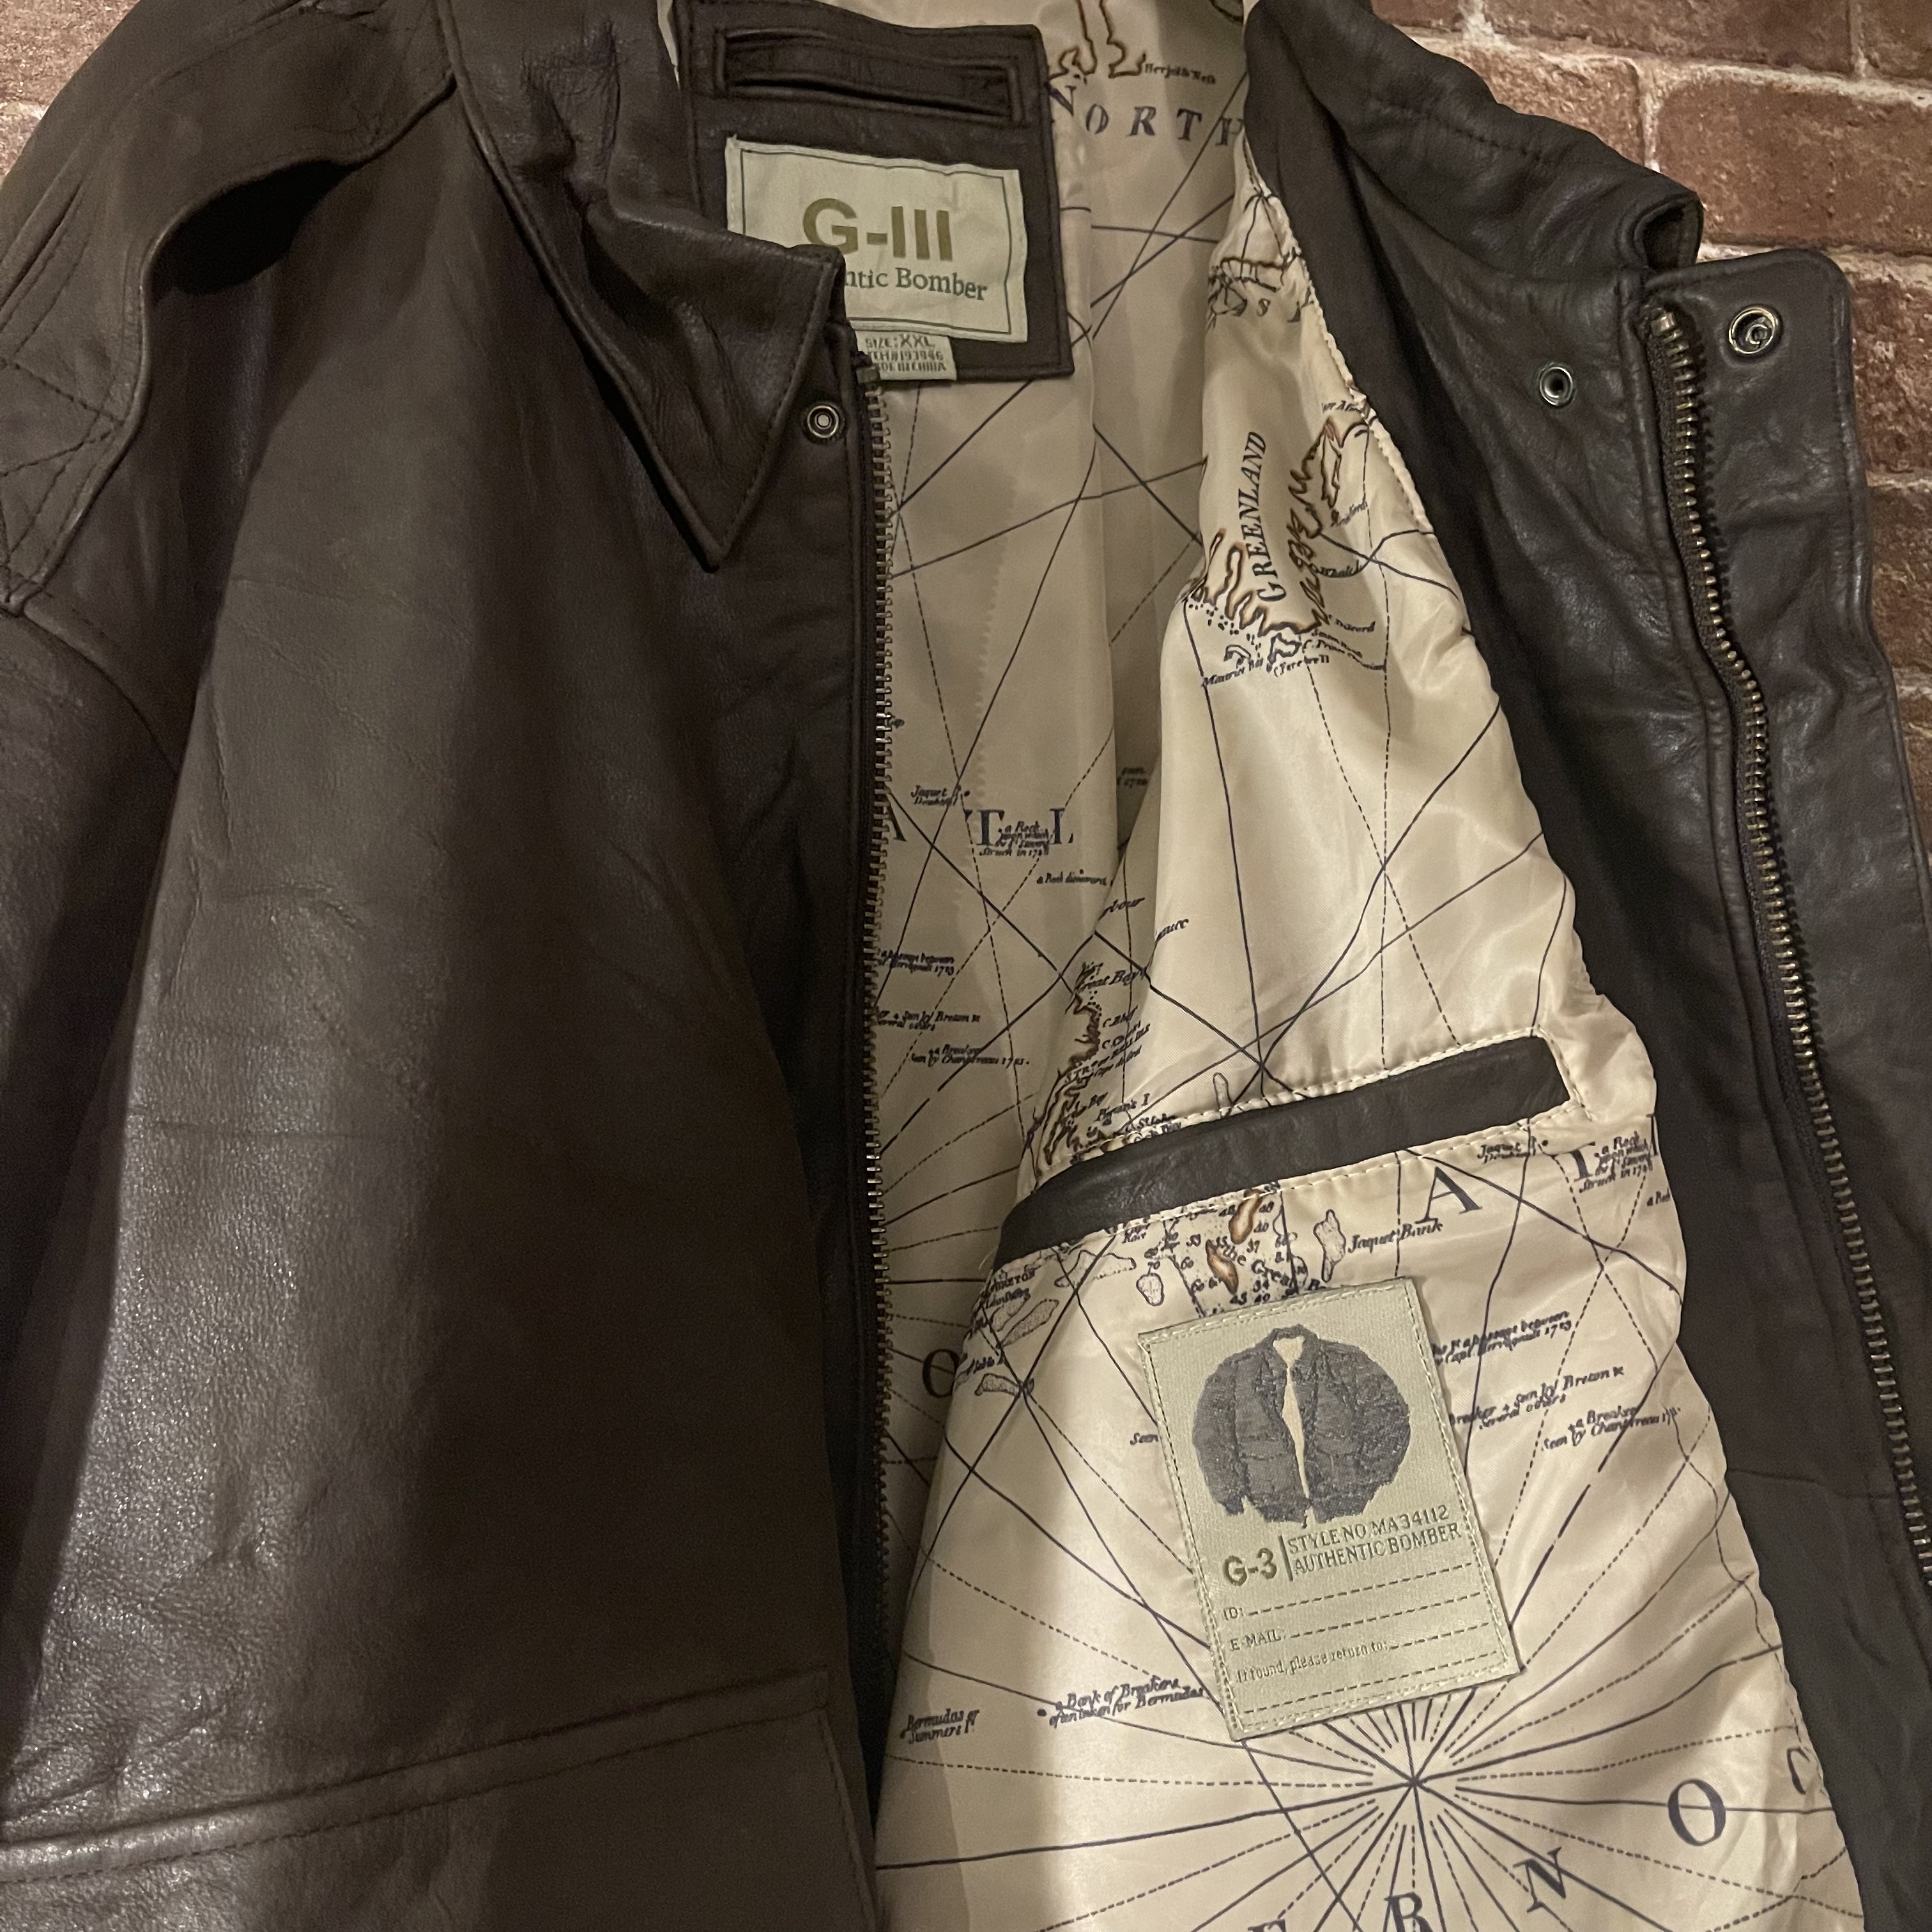 Hunt lamb ☆羊革☆ old leather bomber jacket